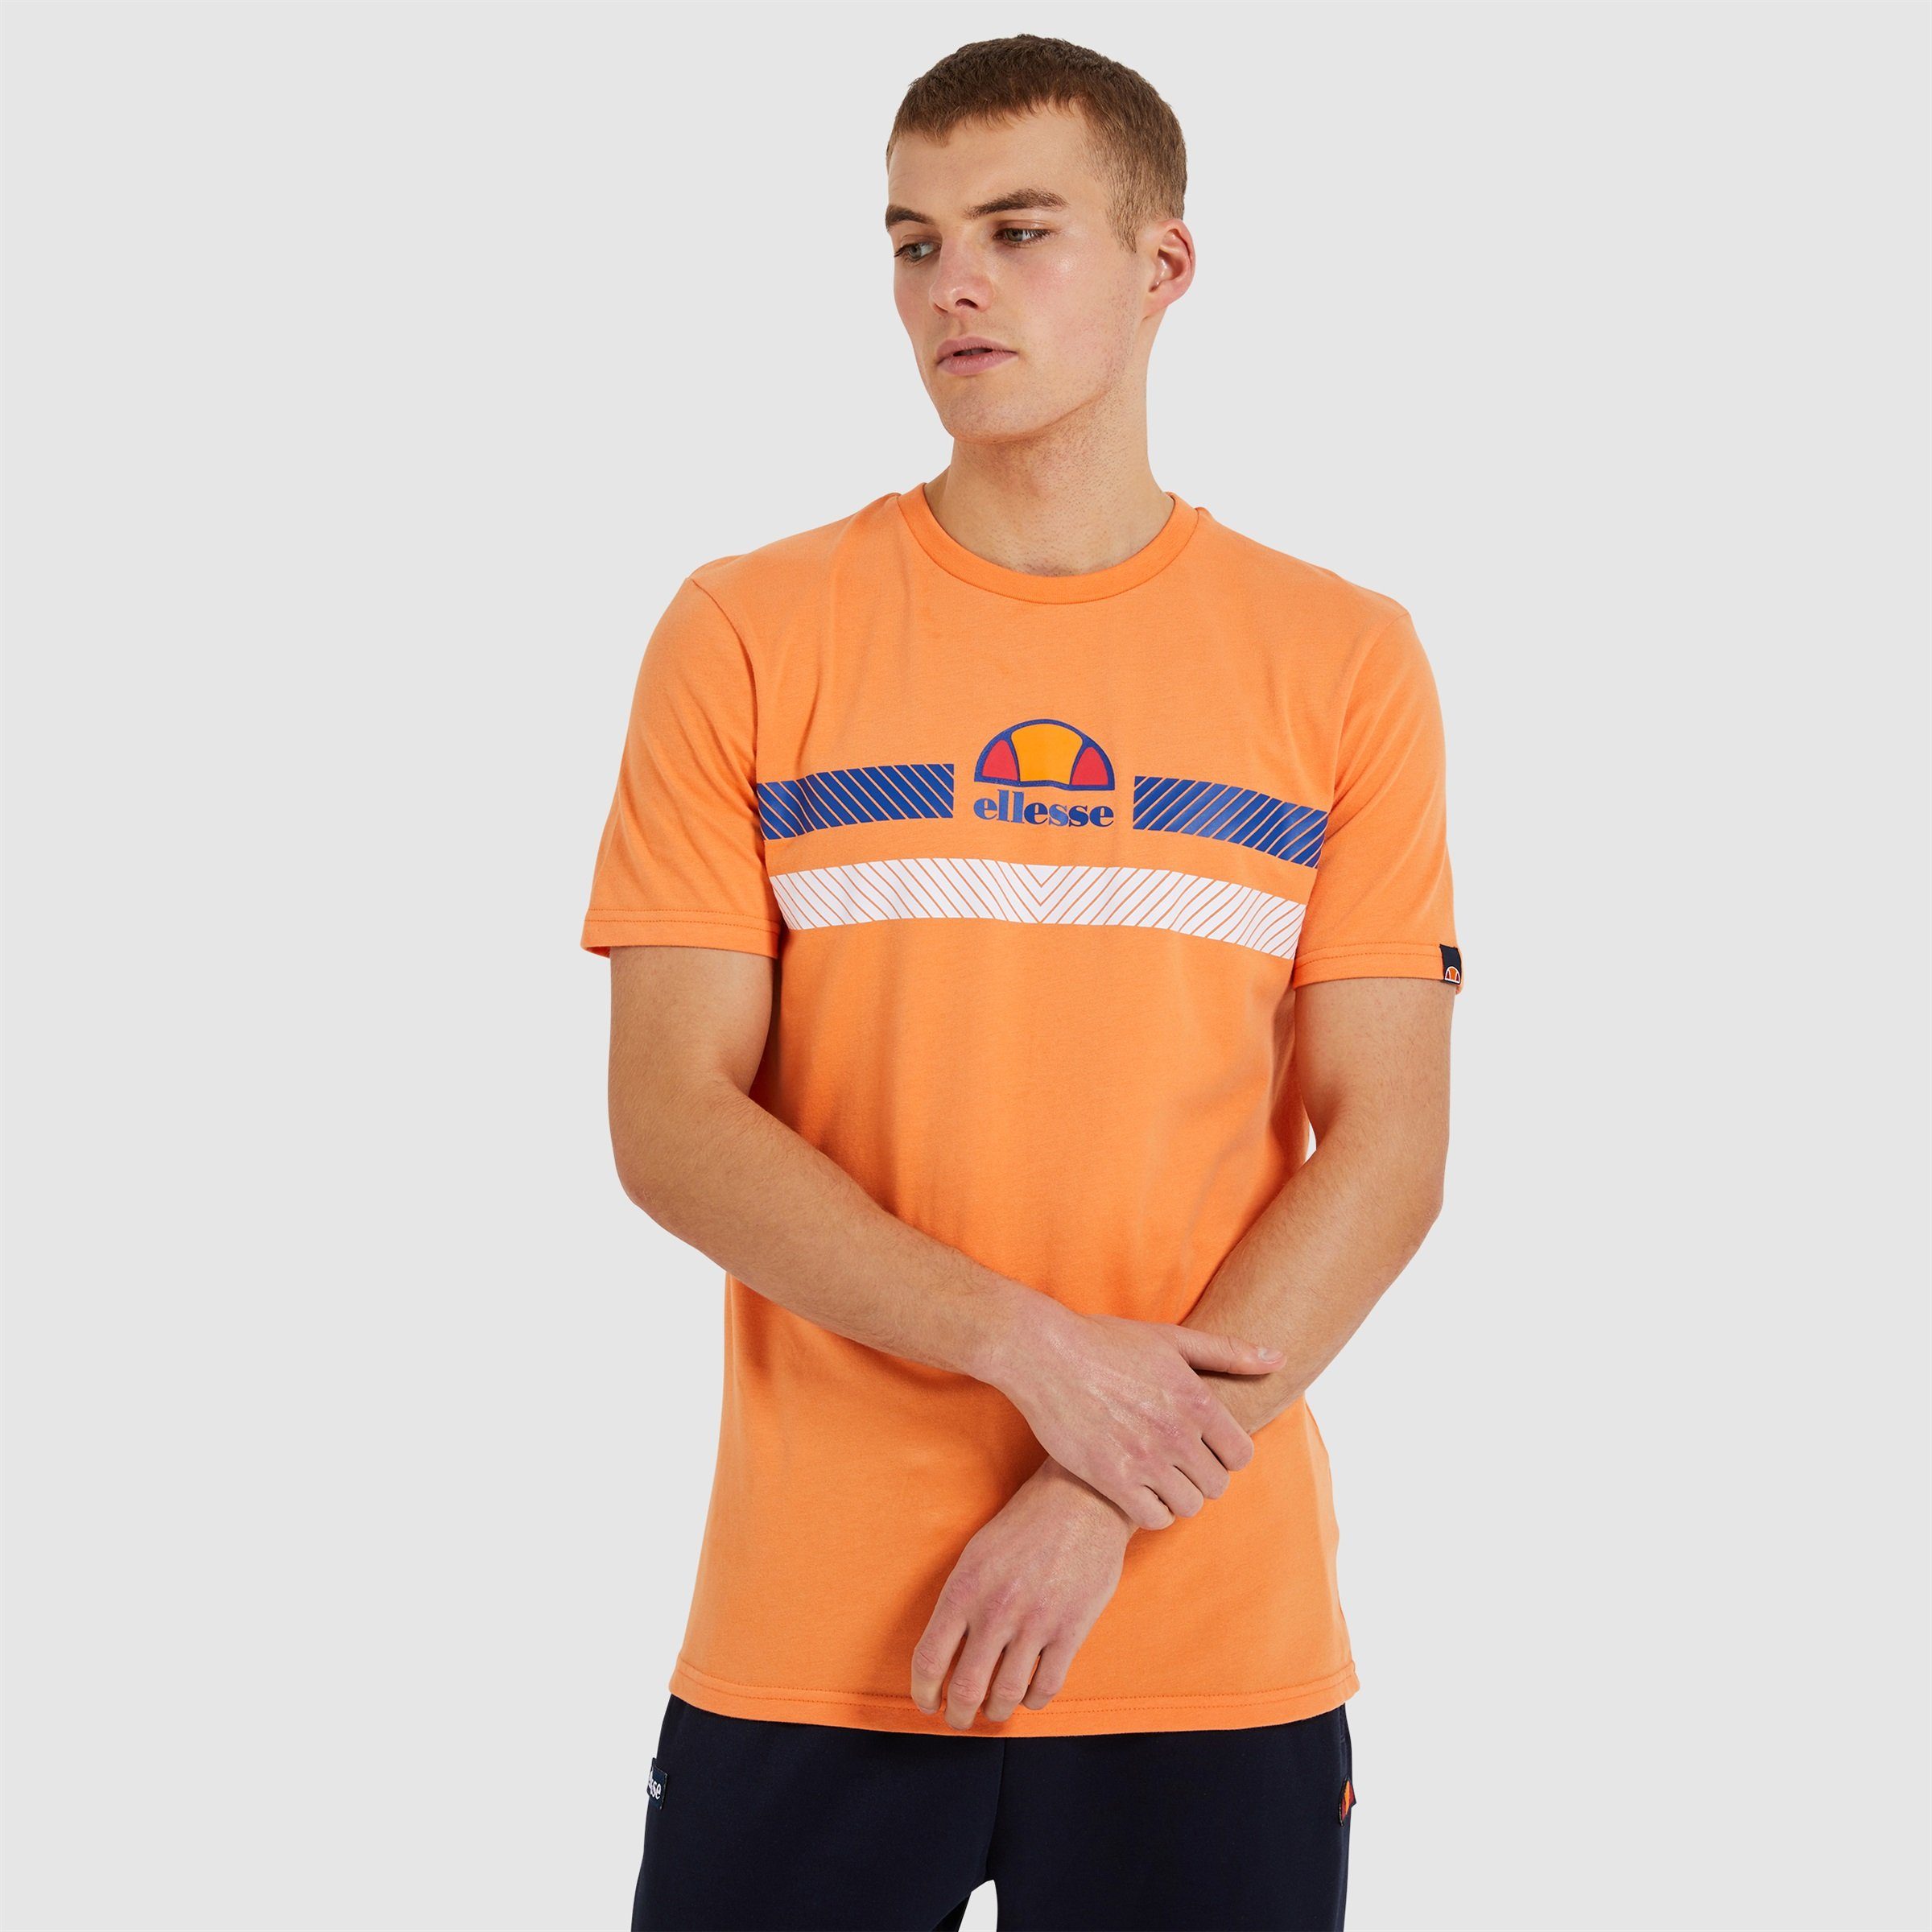 Tee orange Glisenta Ellesse Adult Herren T-Shirt Ellesse T-Shirt